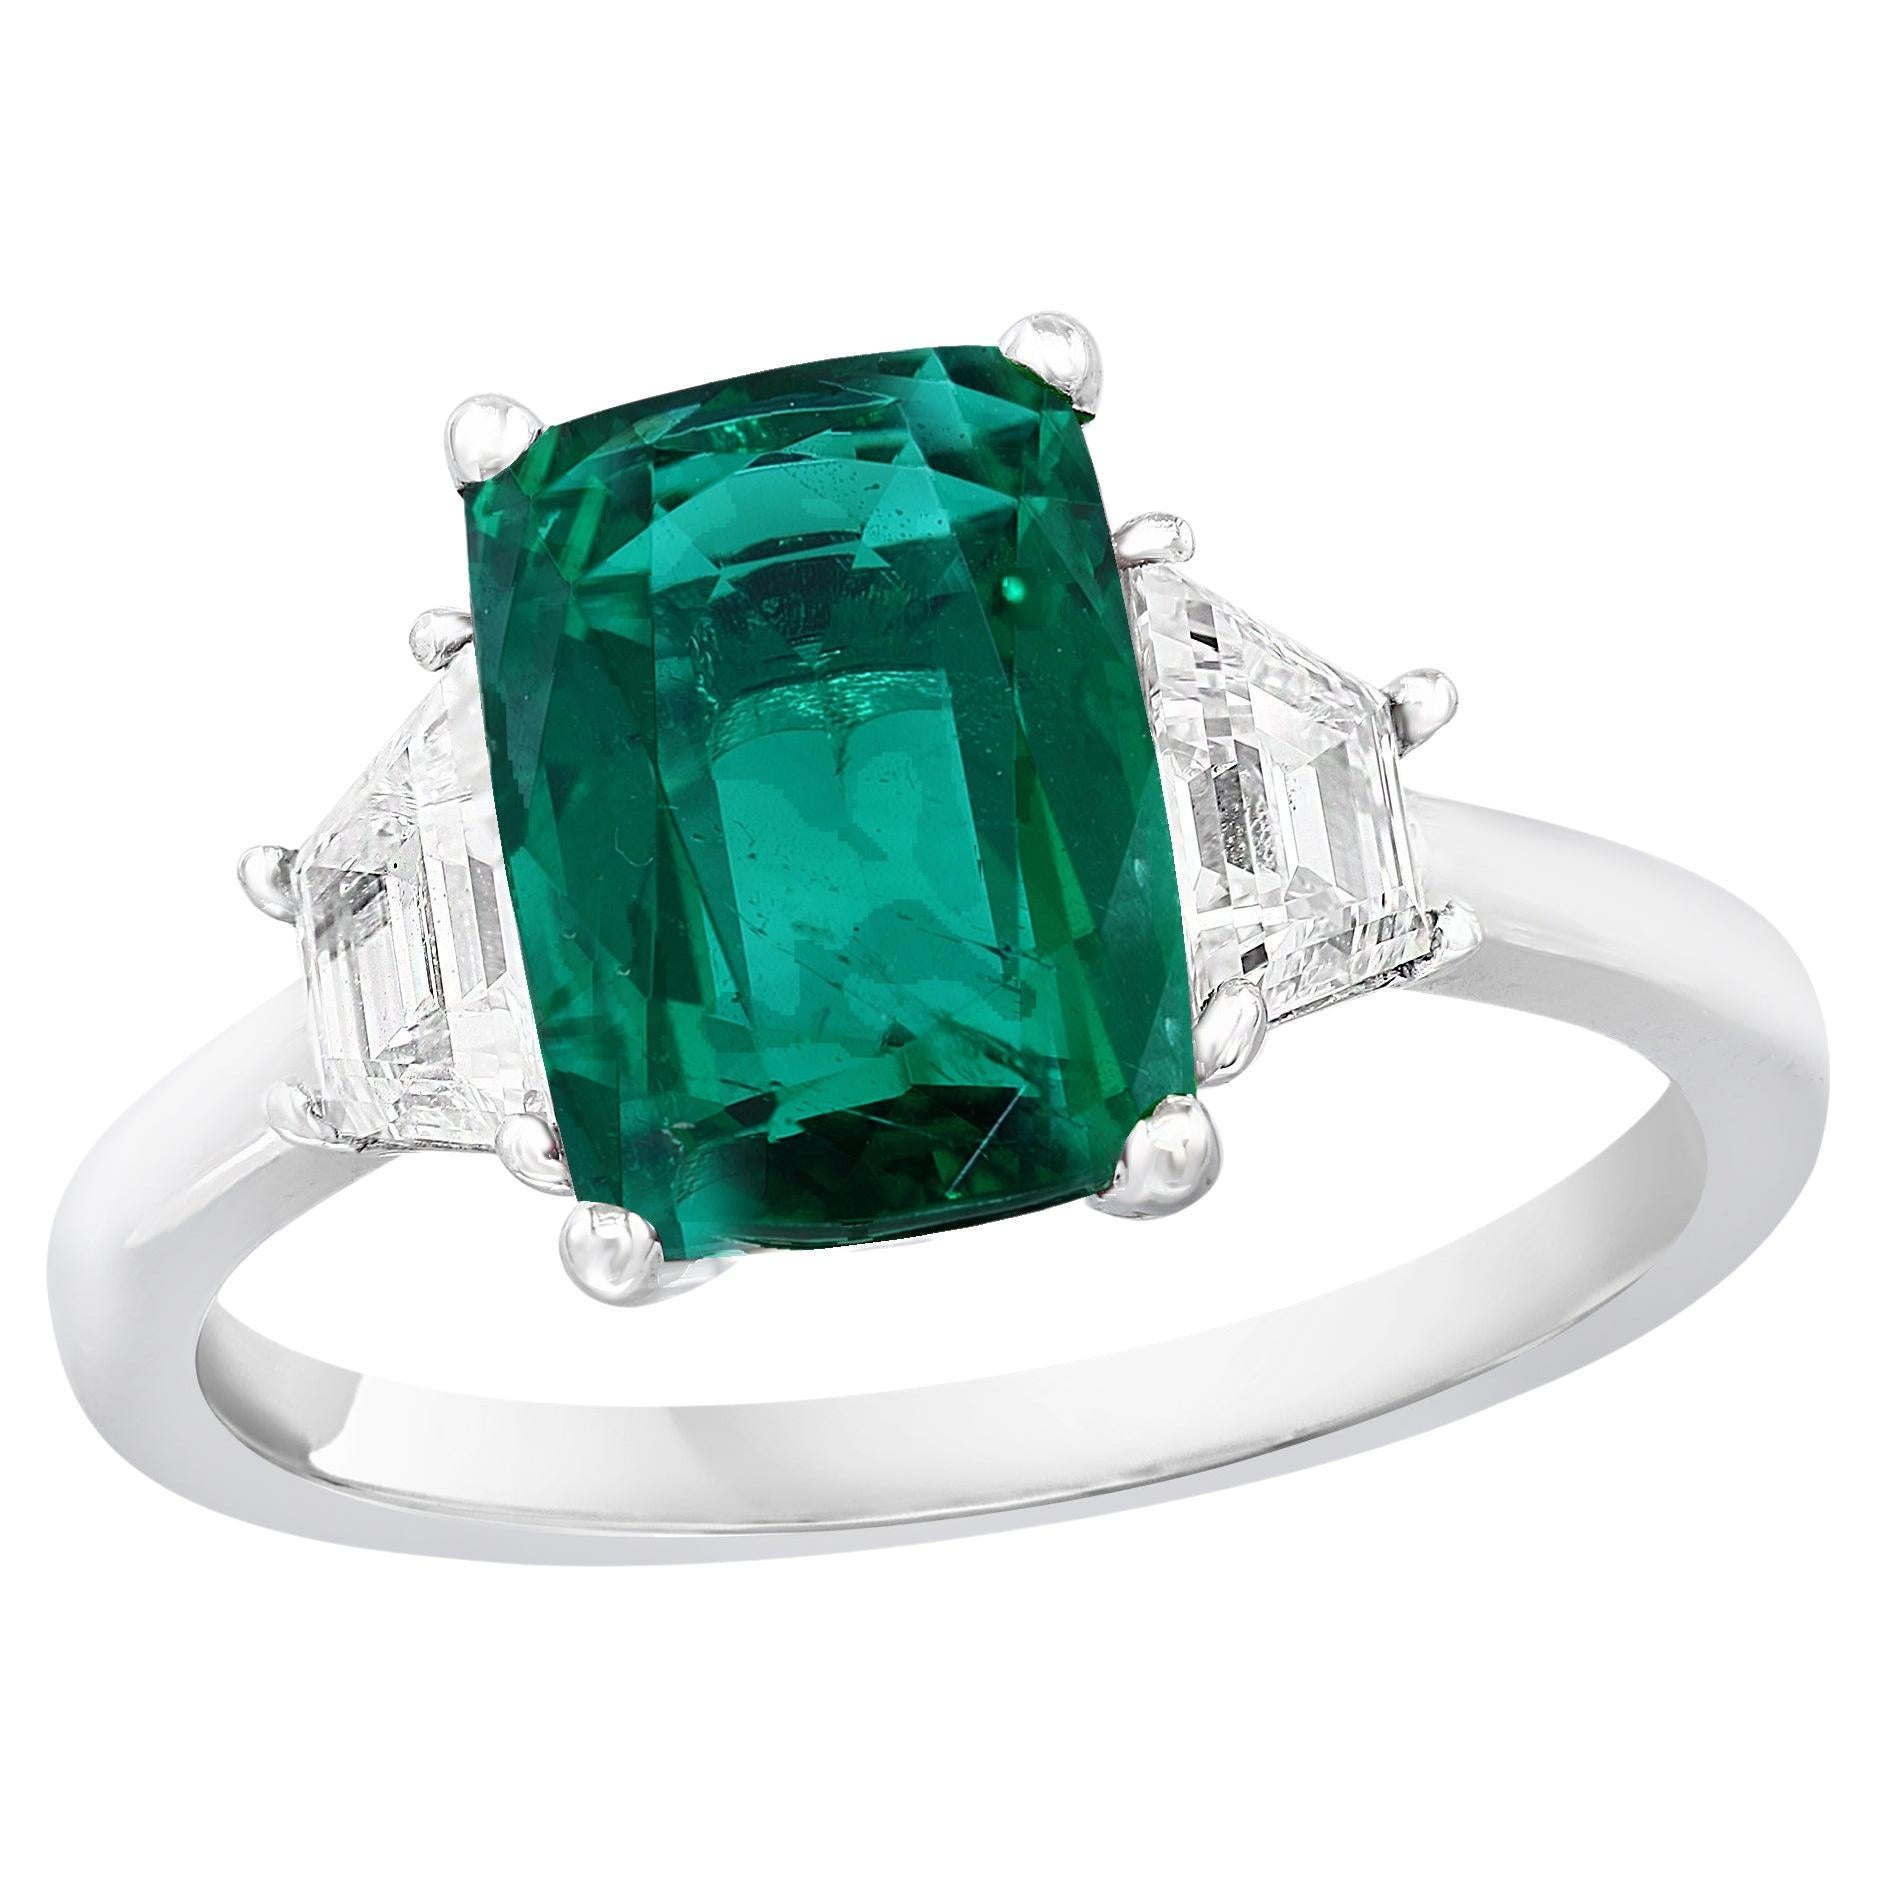 2.91 Carat Cushion Cut Emerald Diamond Three-Stone Engagement Ring in Platinum